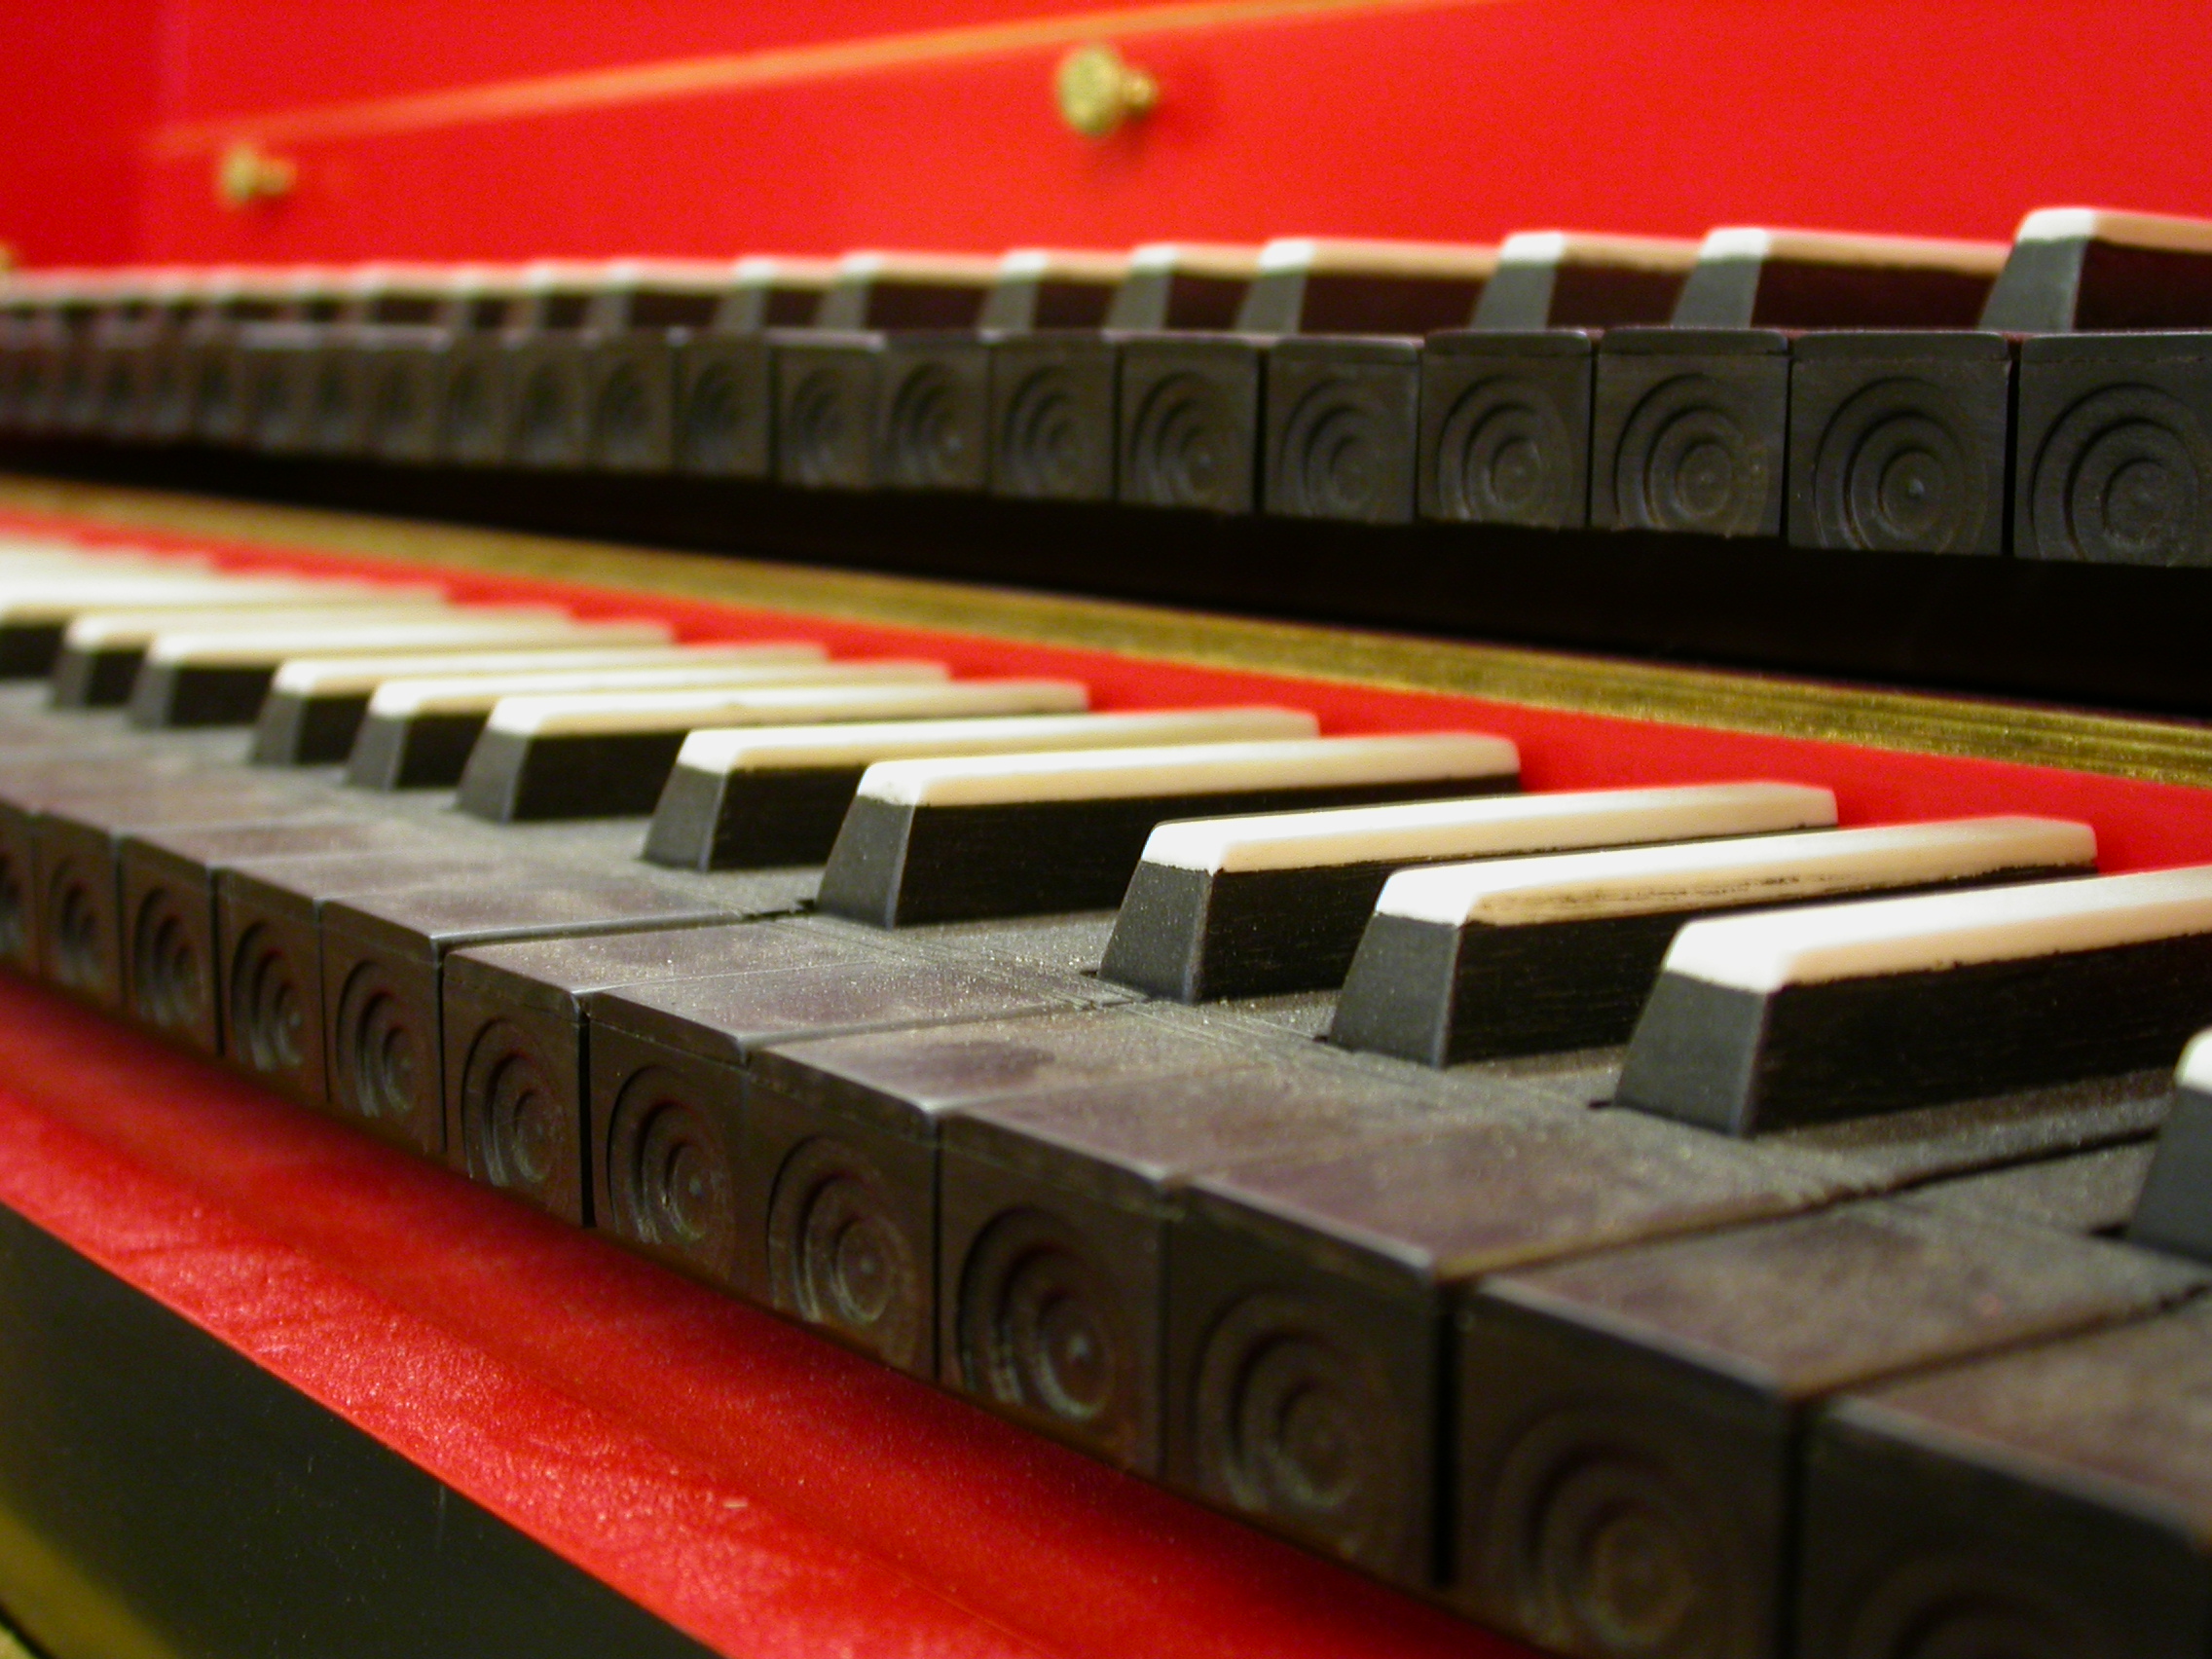 paul keyboard key keys black and white harpsichord instrument